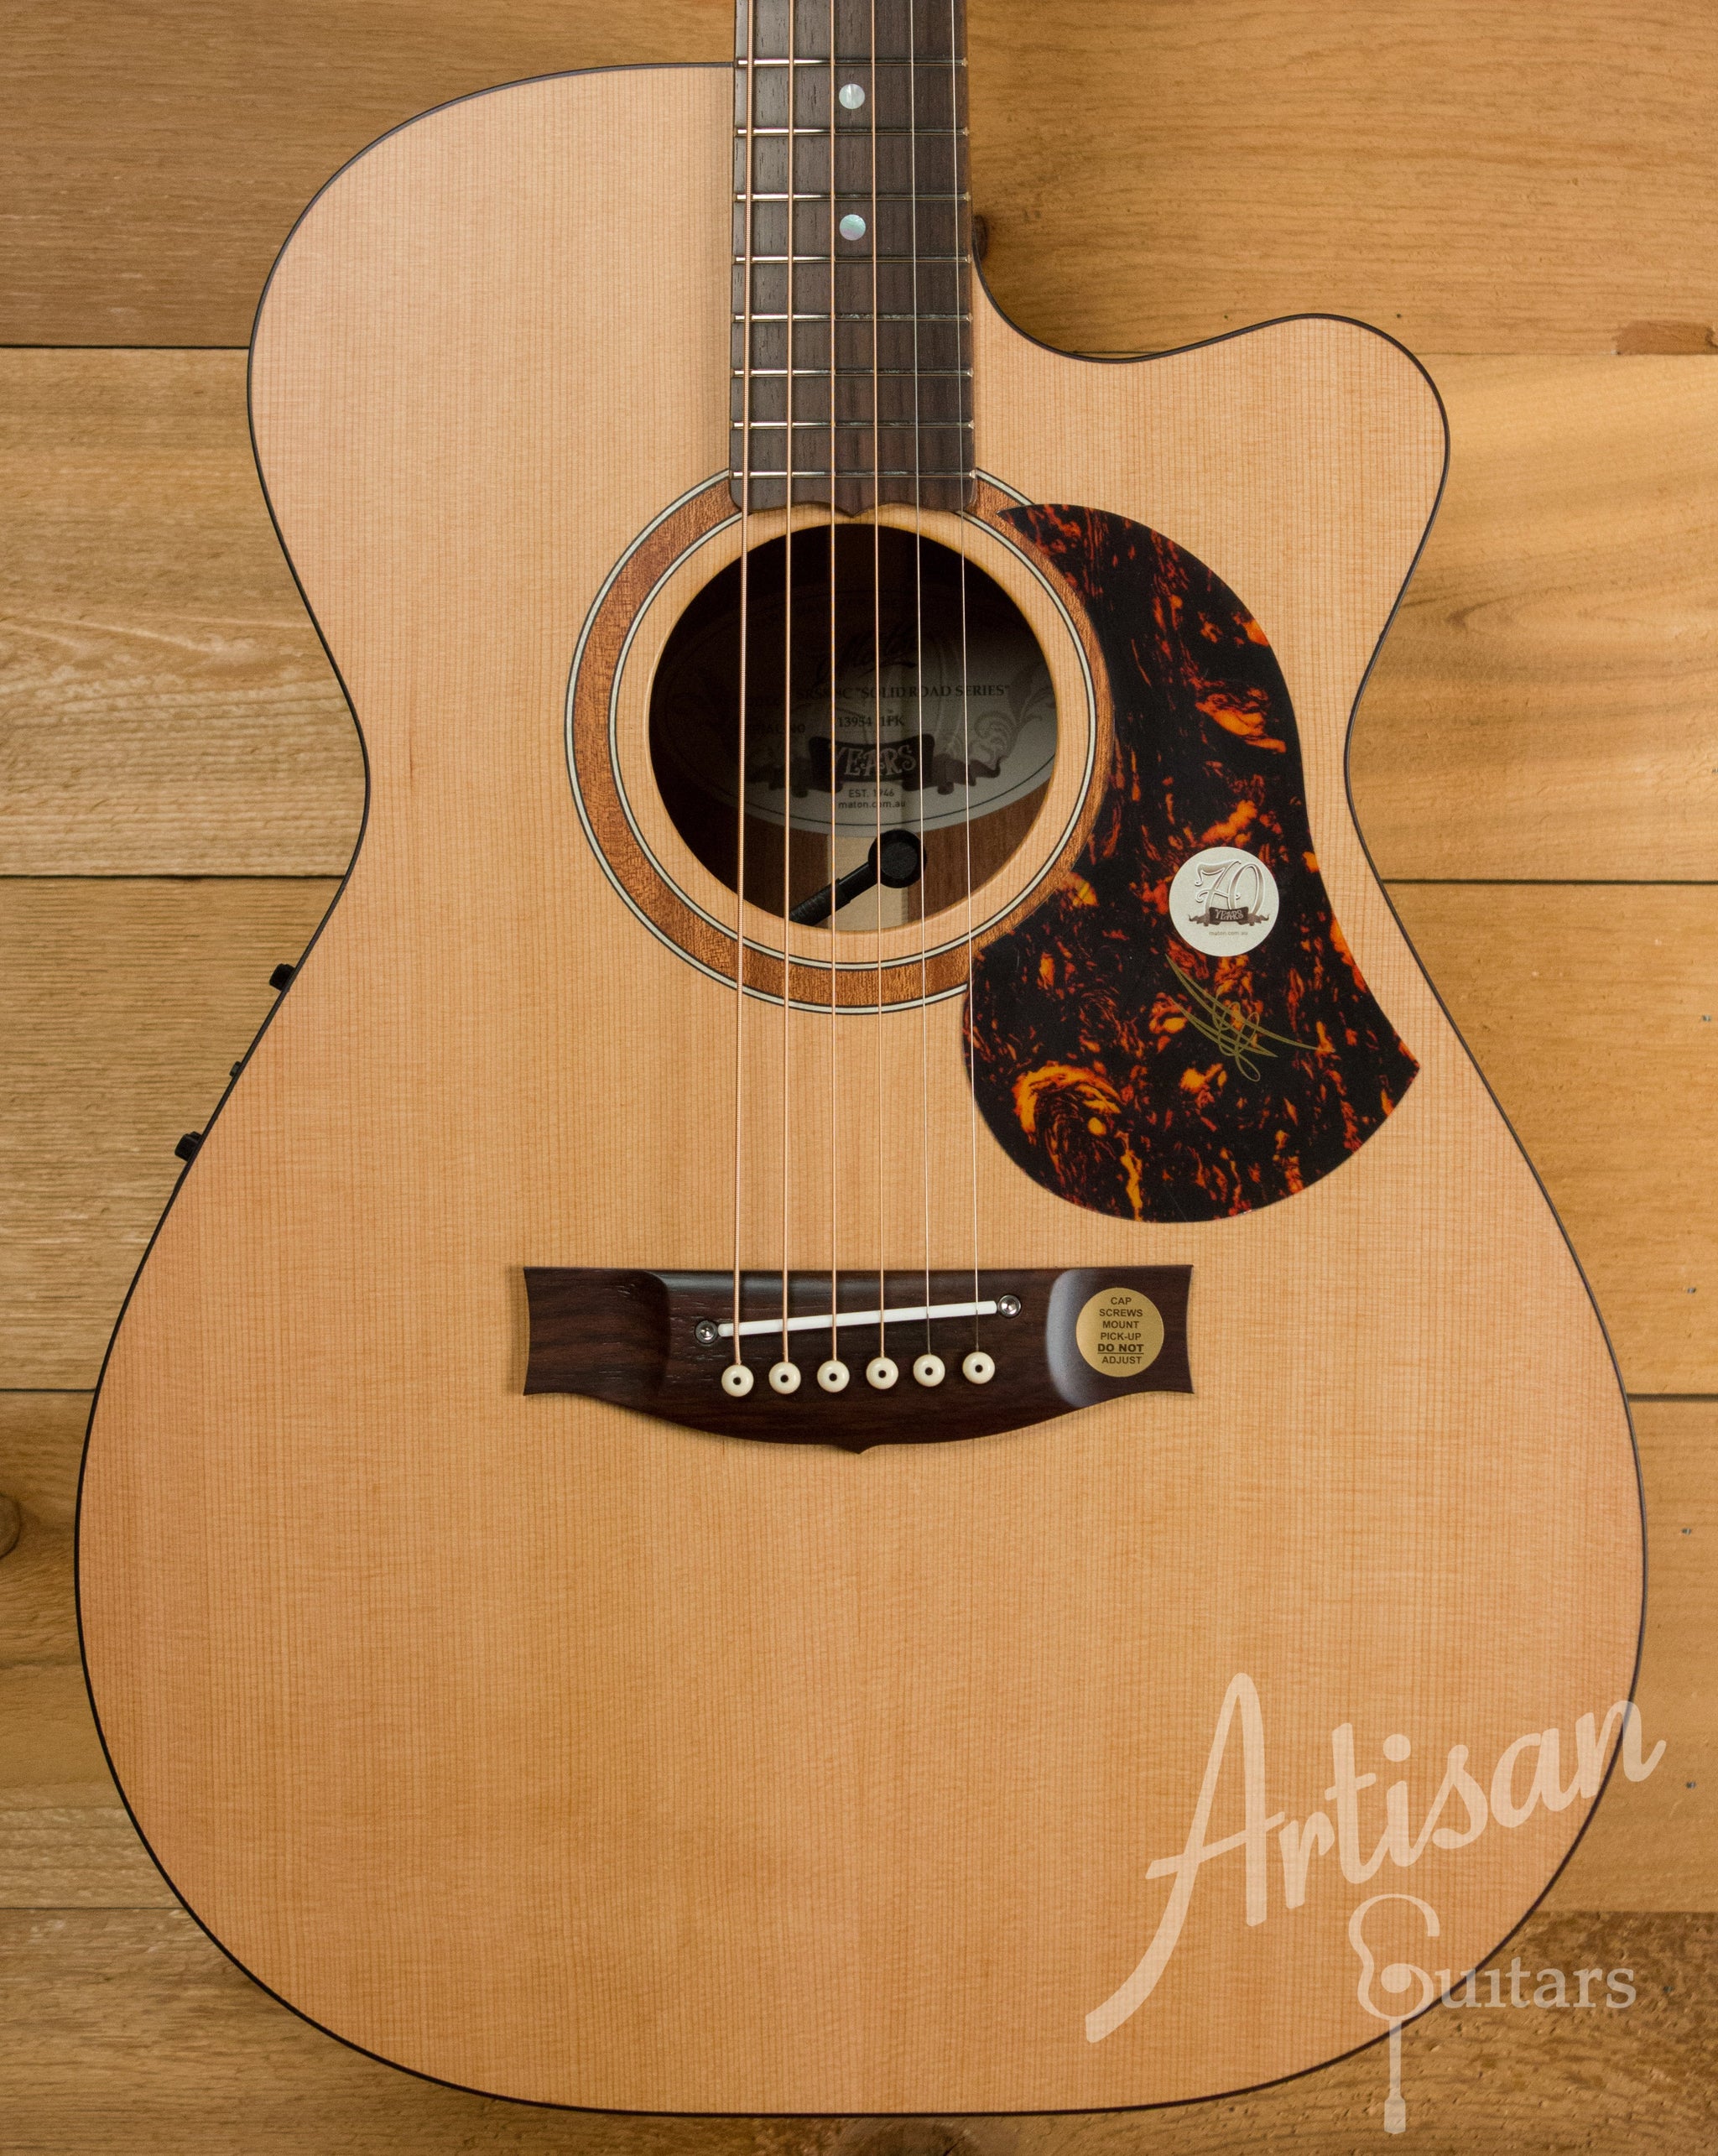 Maton SRS808C Guitar Western Red Cedar and Solid Blackwood Cutaway ID-11207 - Artisan Guitars